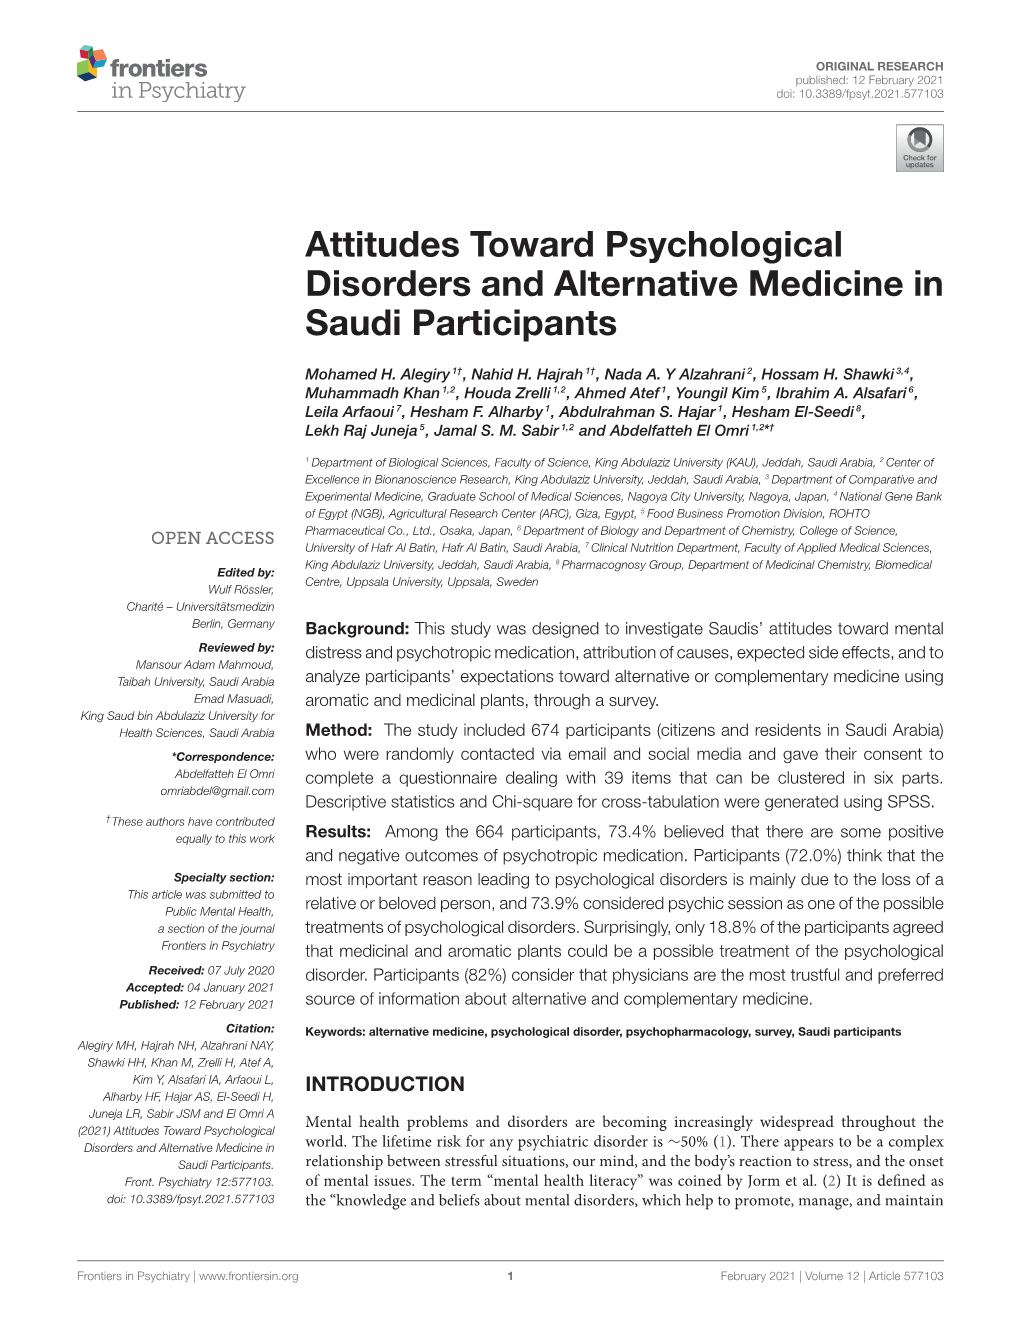 Attitudes Toward Psychological Disorders and Alternative Medicine in Saudi Participants